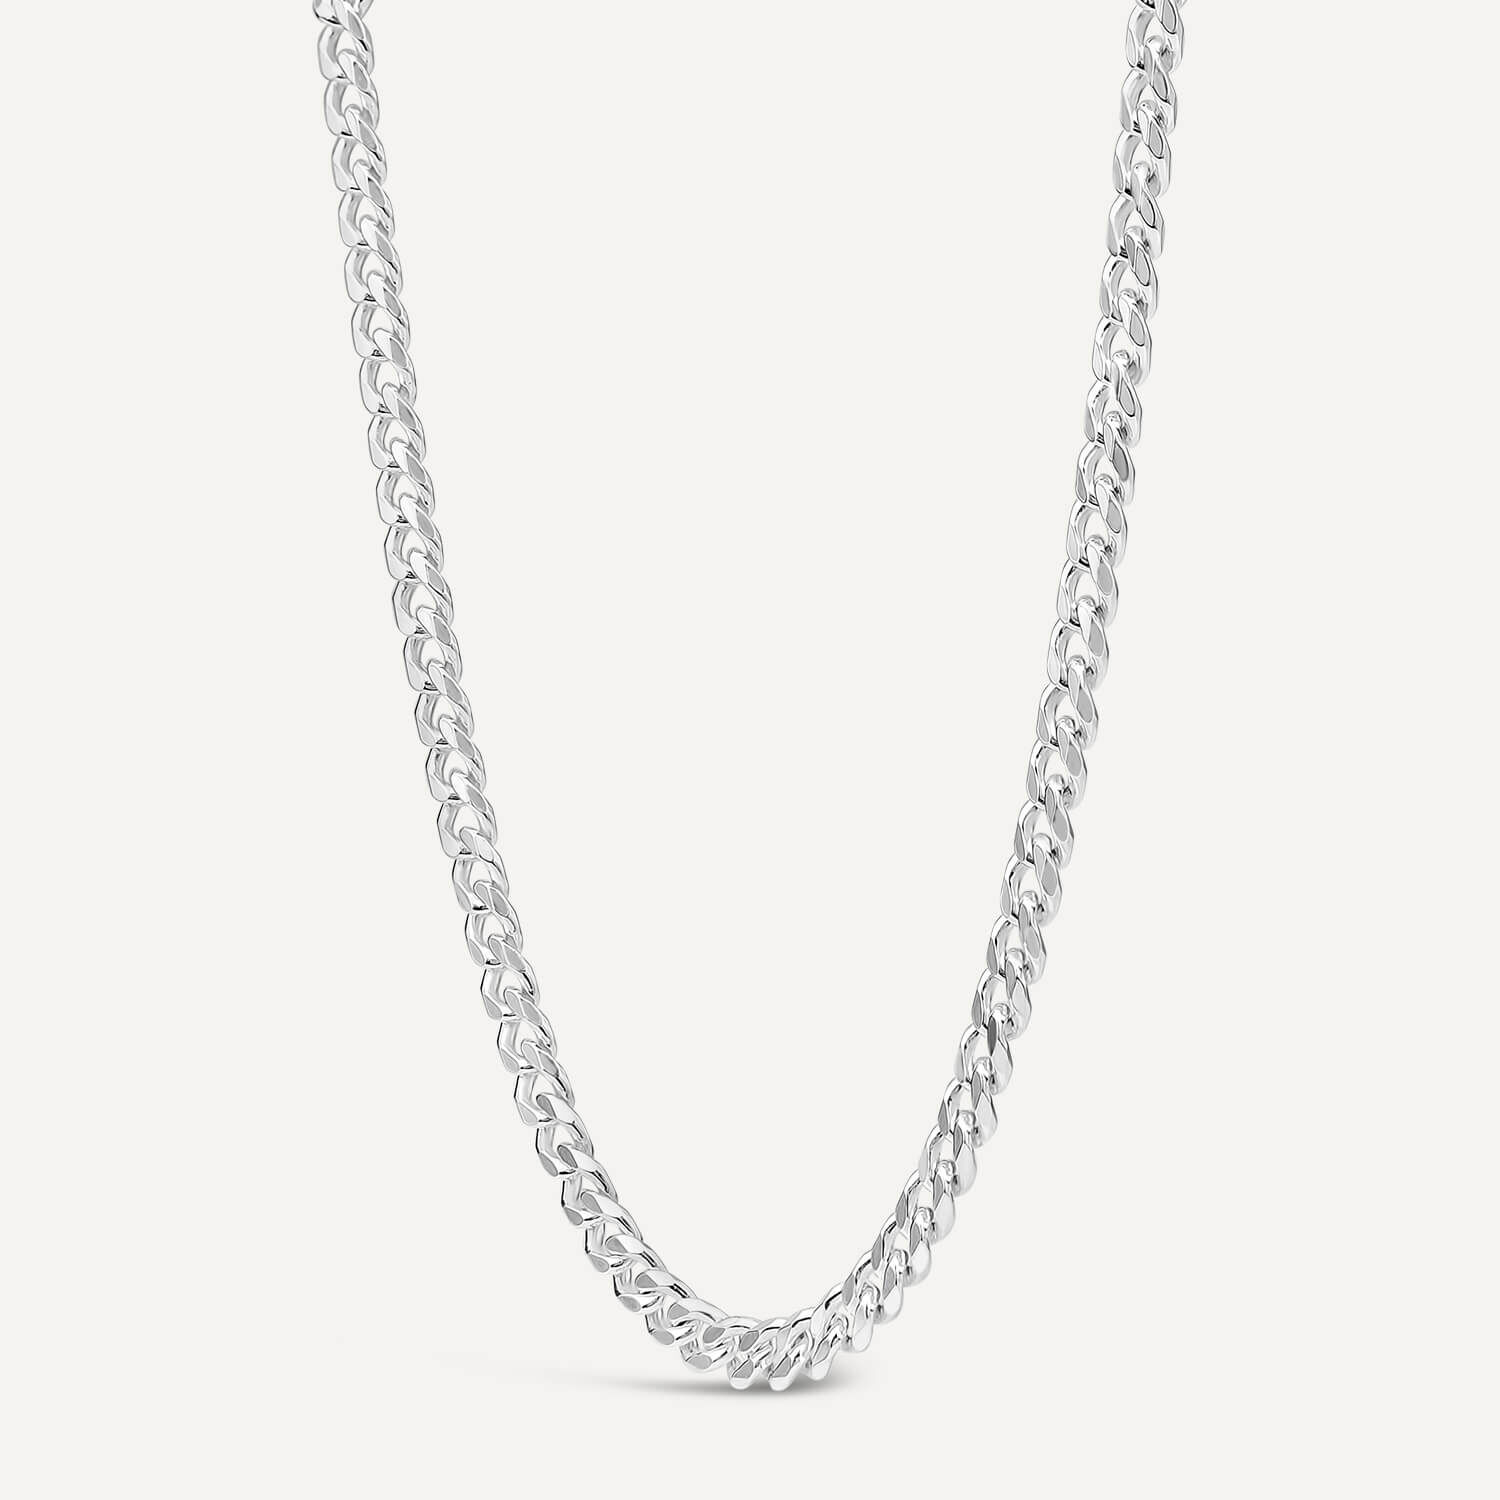 Buy Men's Diamond Necklaces | GLAMIRA.co.uk